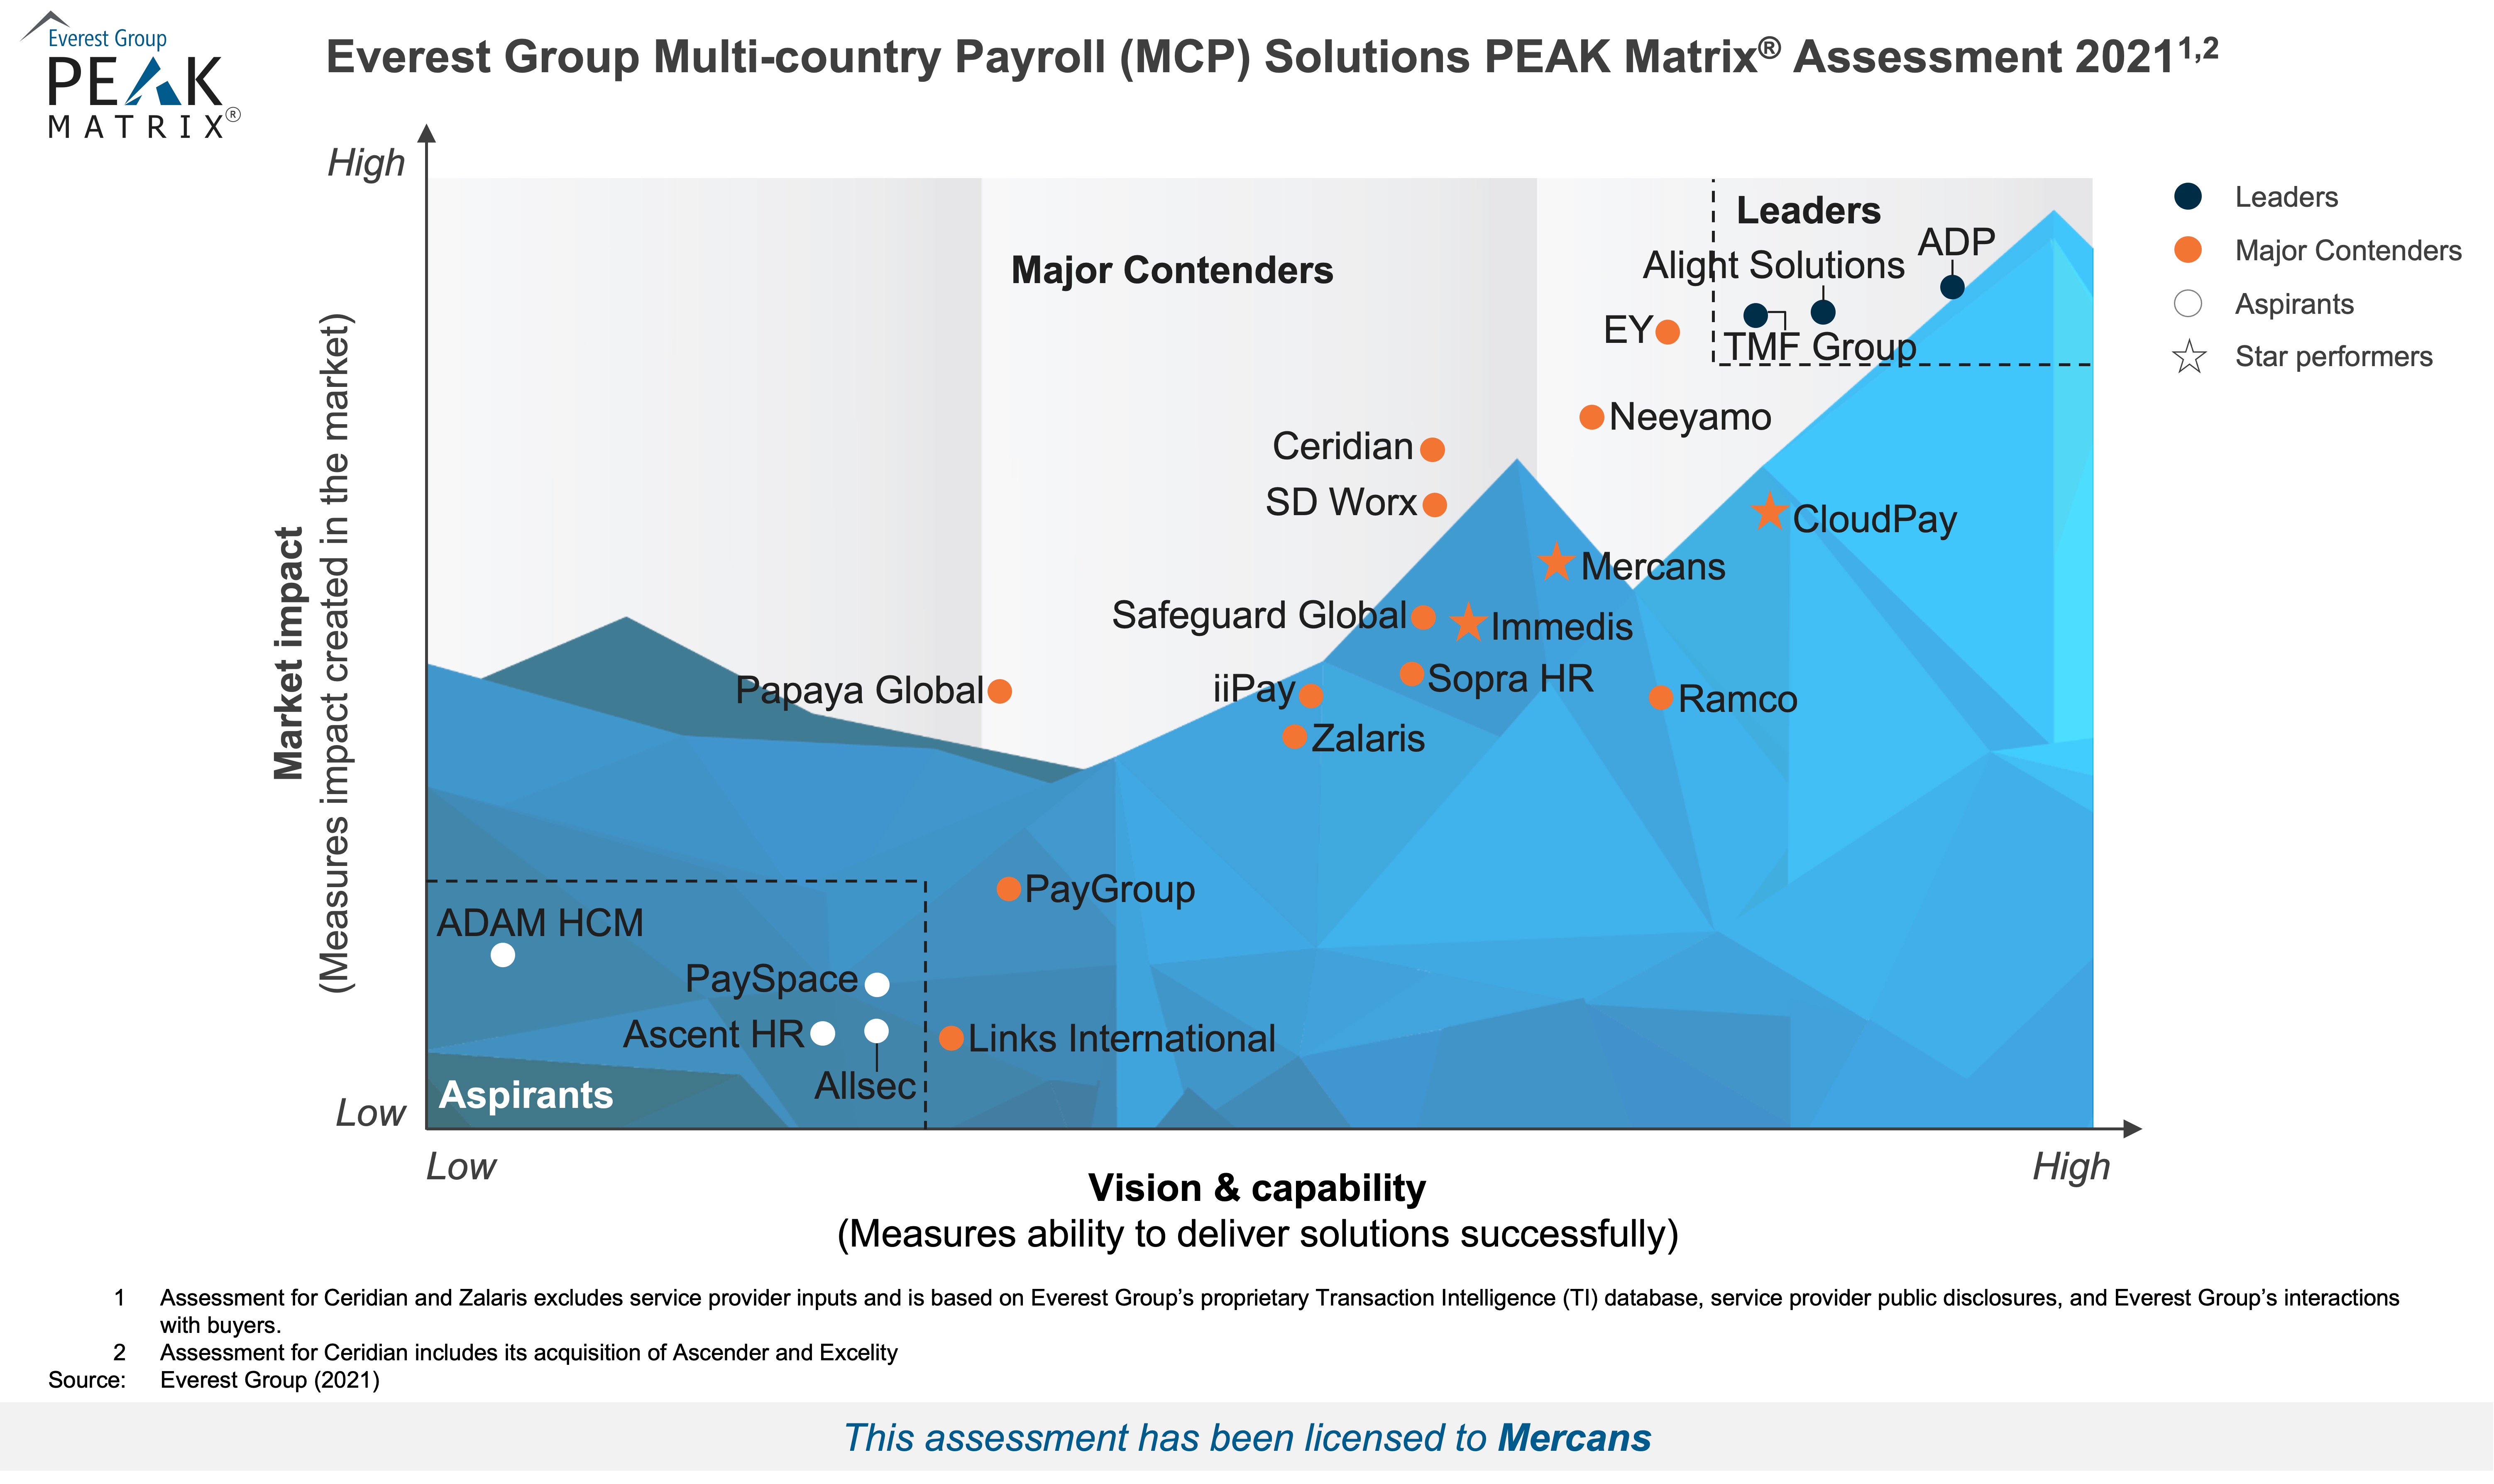 Mercans on MCP Peak Matrix